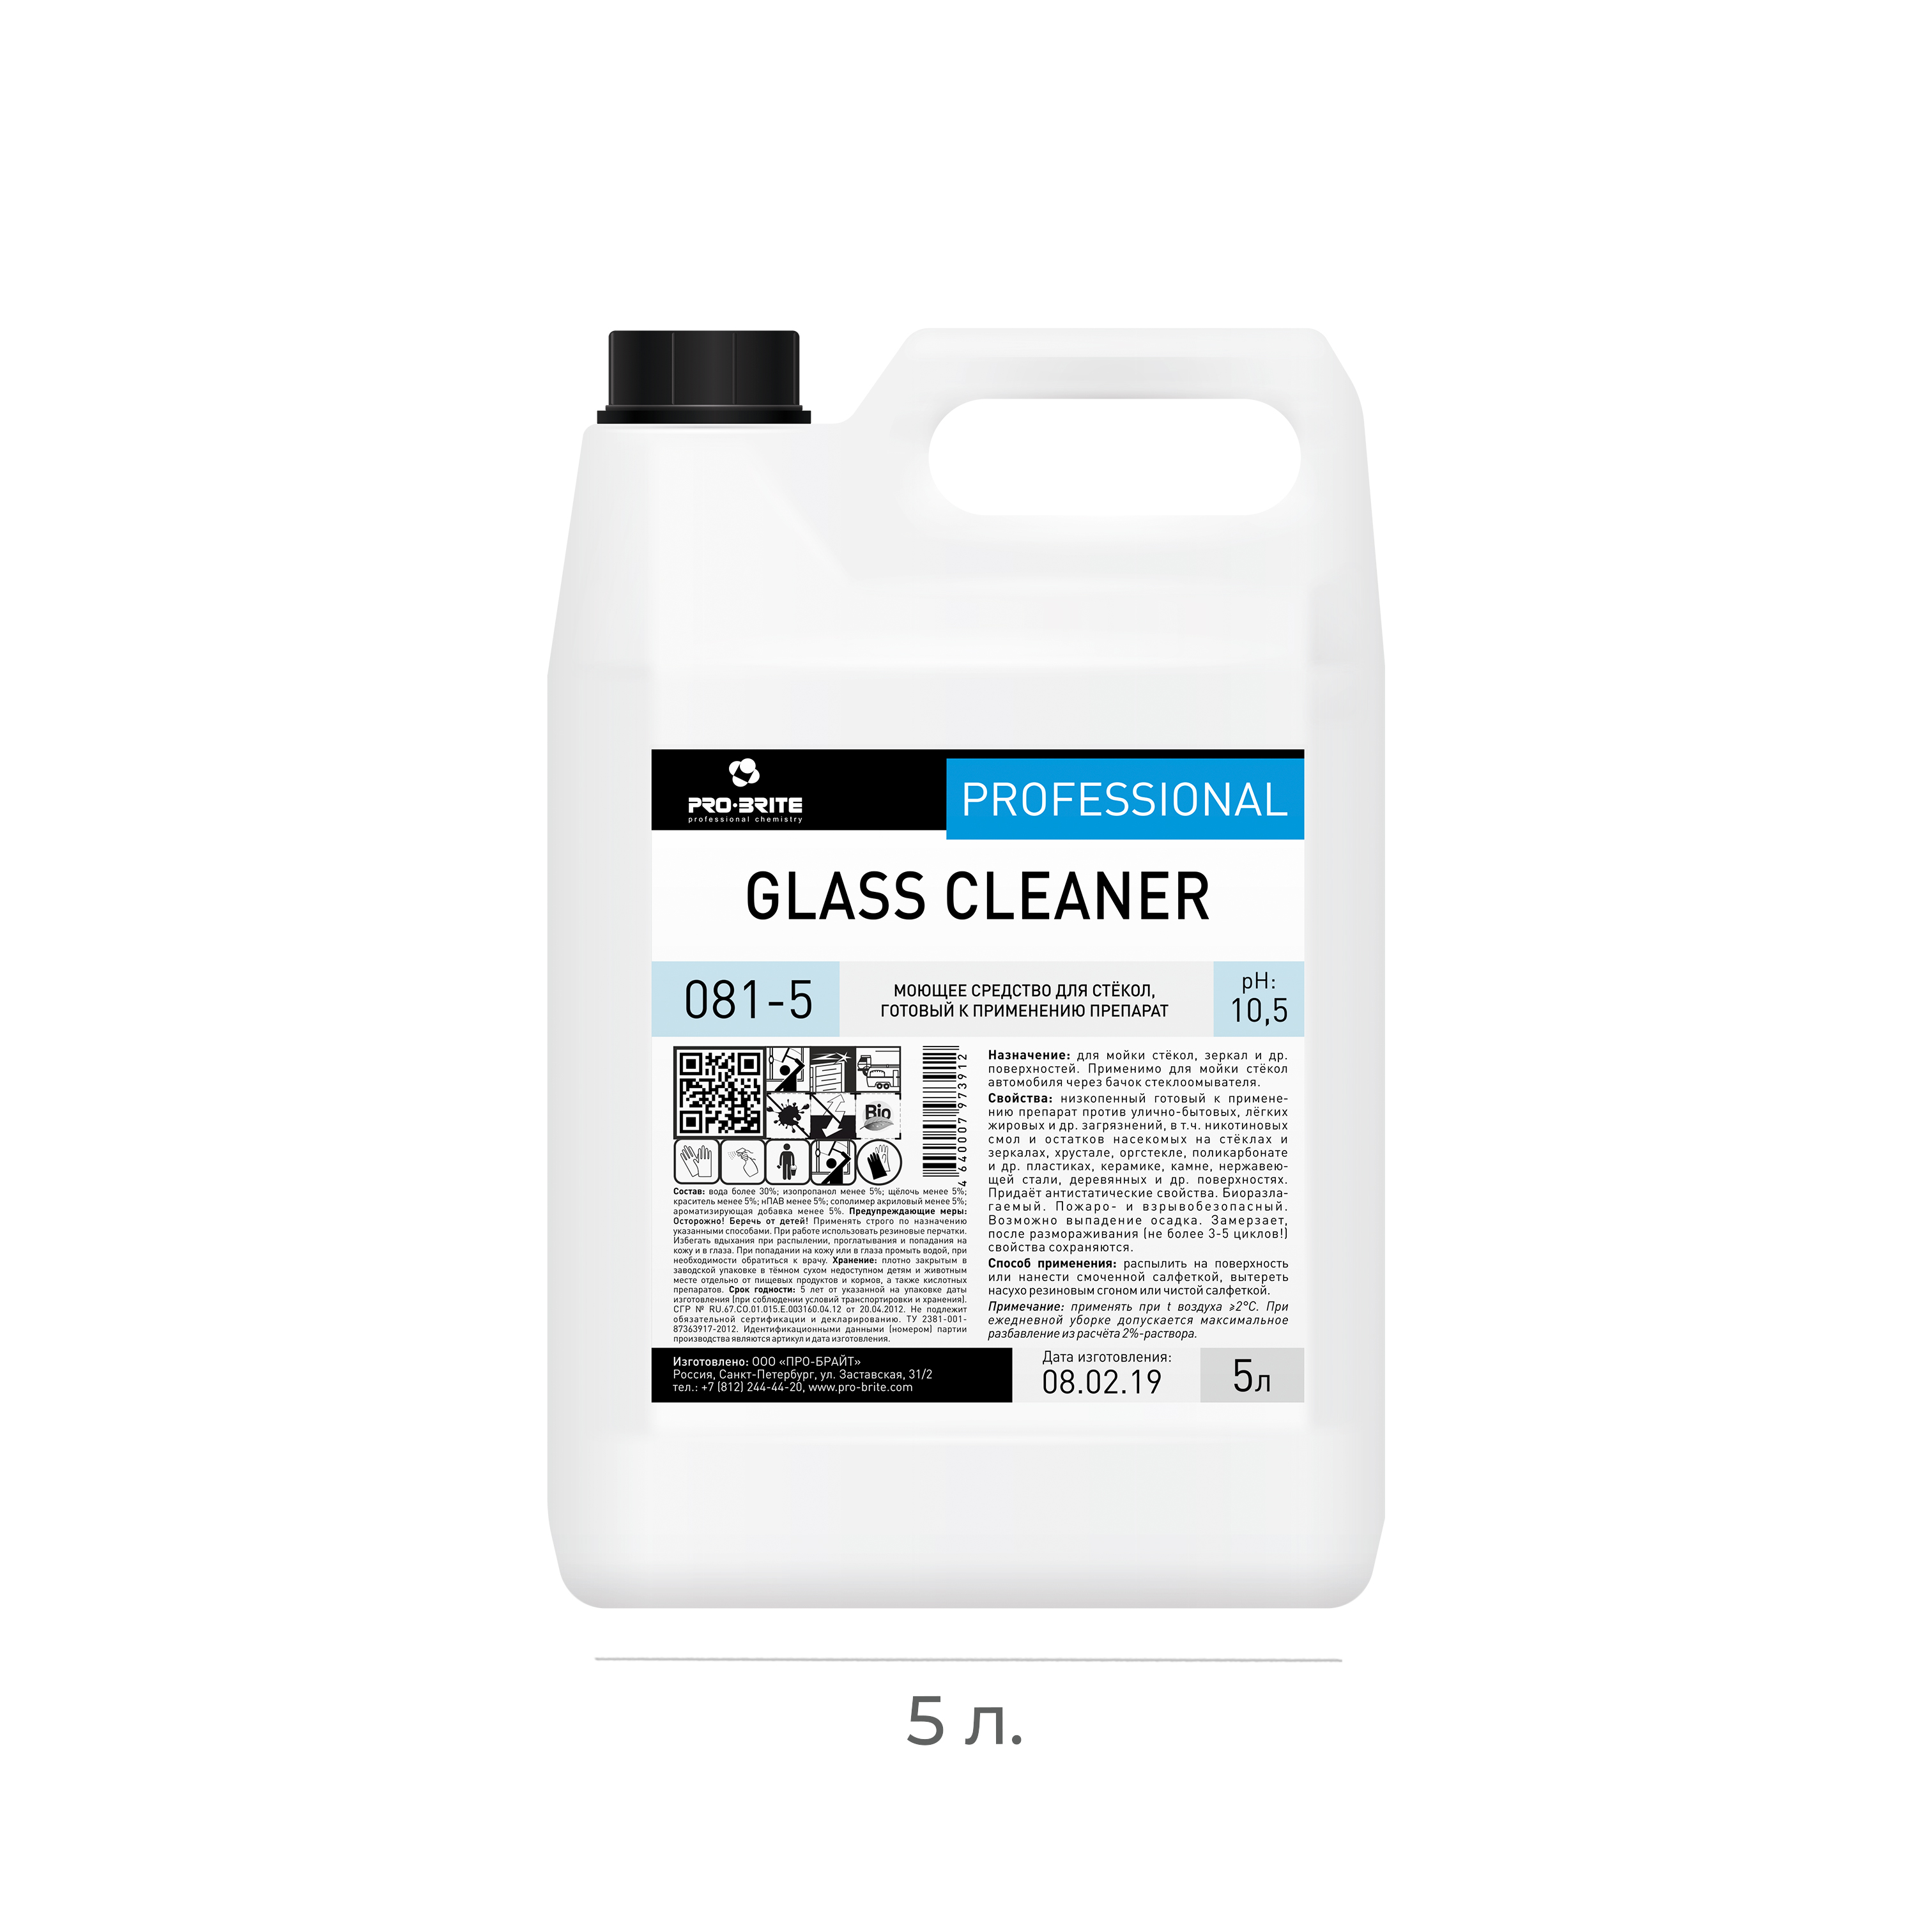 Ср-во для чистки стекол Pro-brite Glass Cleaner 5л 081-5 (4)